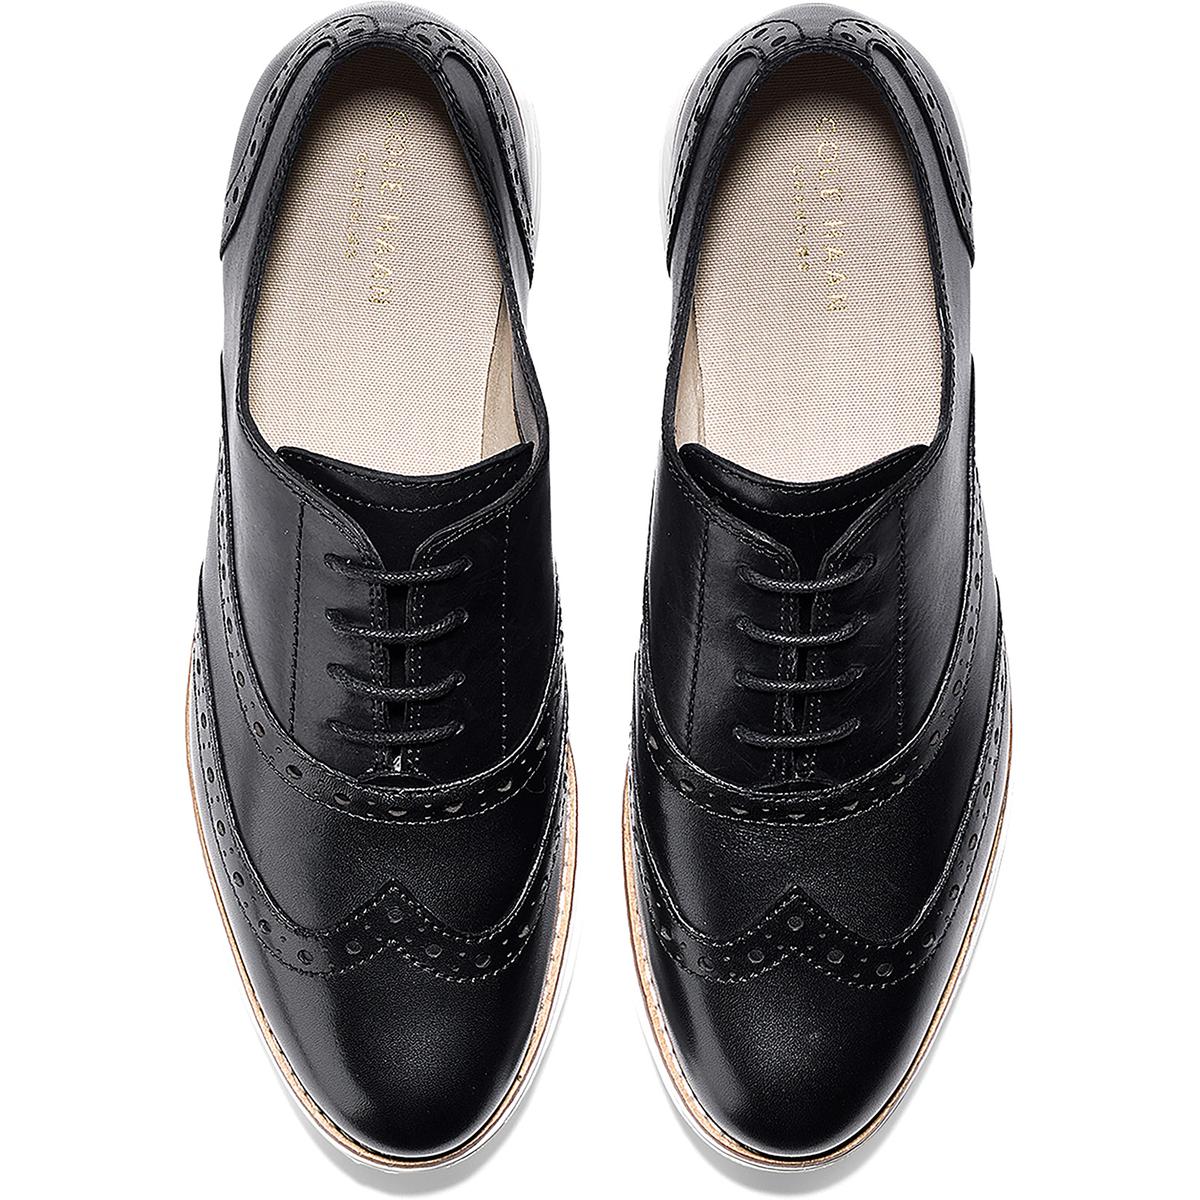 Cole Haan Womens Original Grand Black Oxfords Shoes 10.5 Medium (B,M